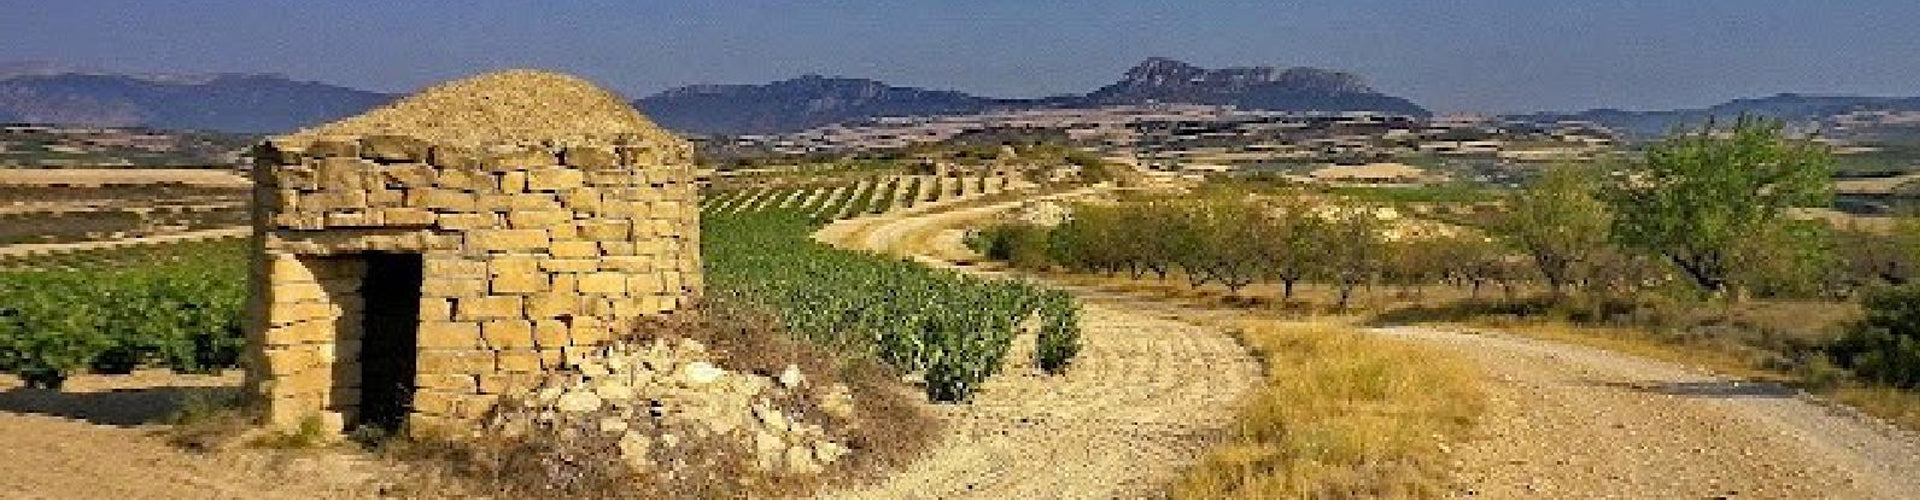 Bodegas Ondarre Rioja producer from Logroño in Spain